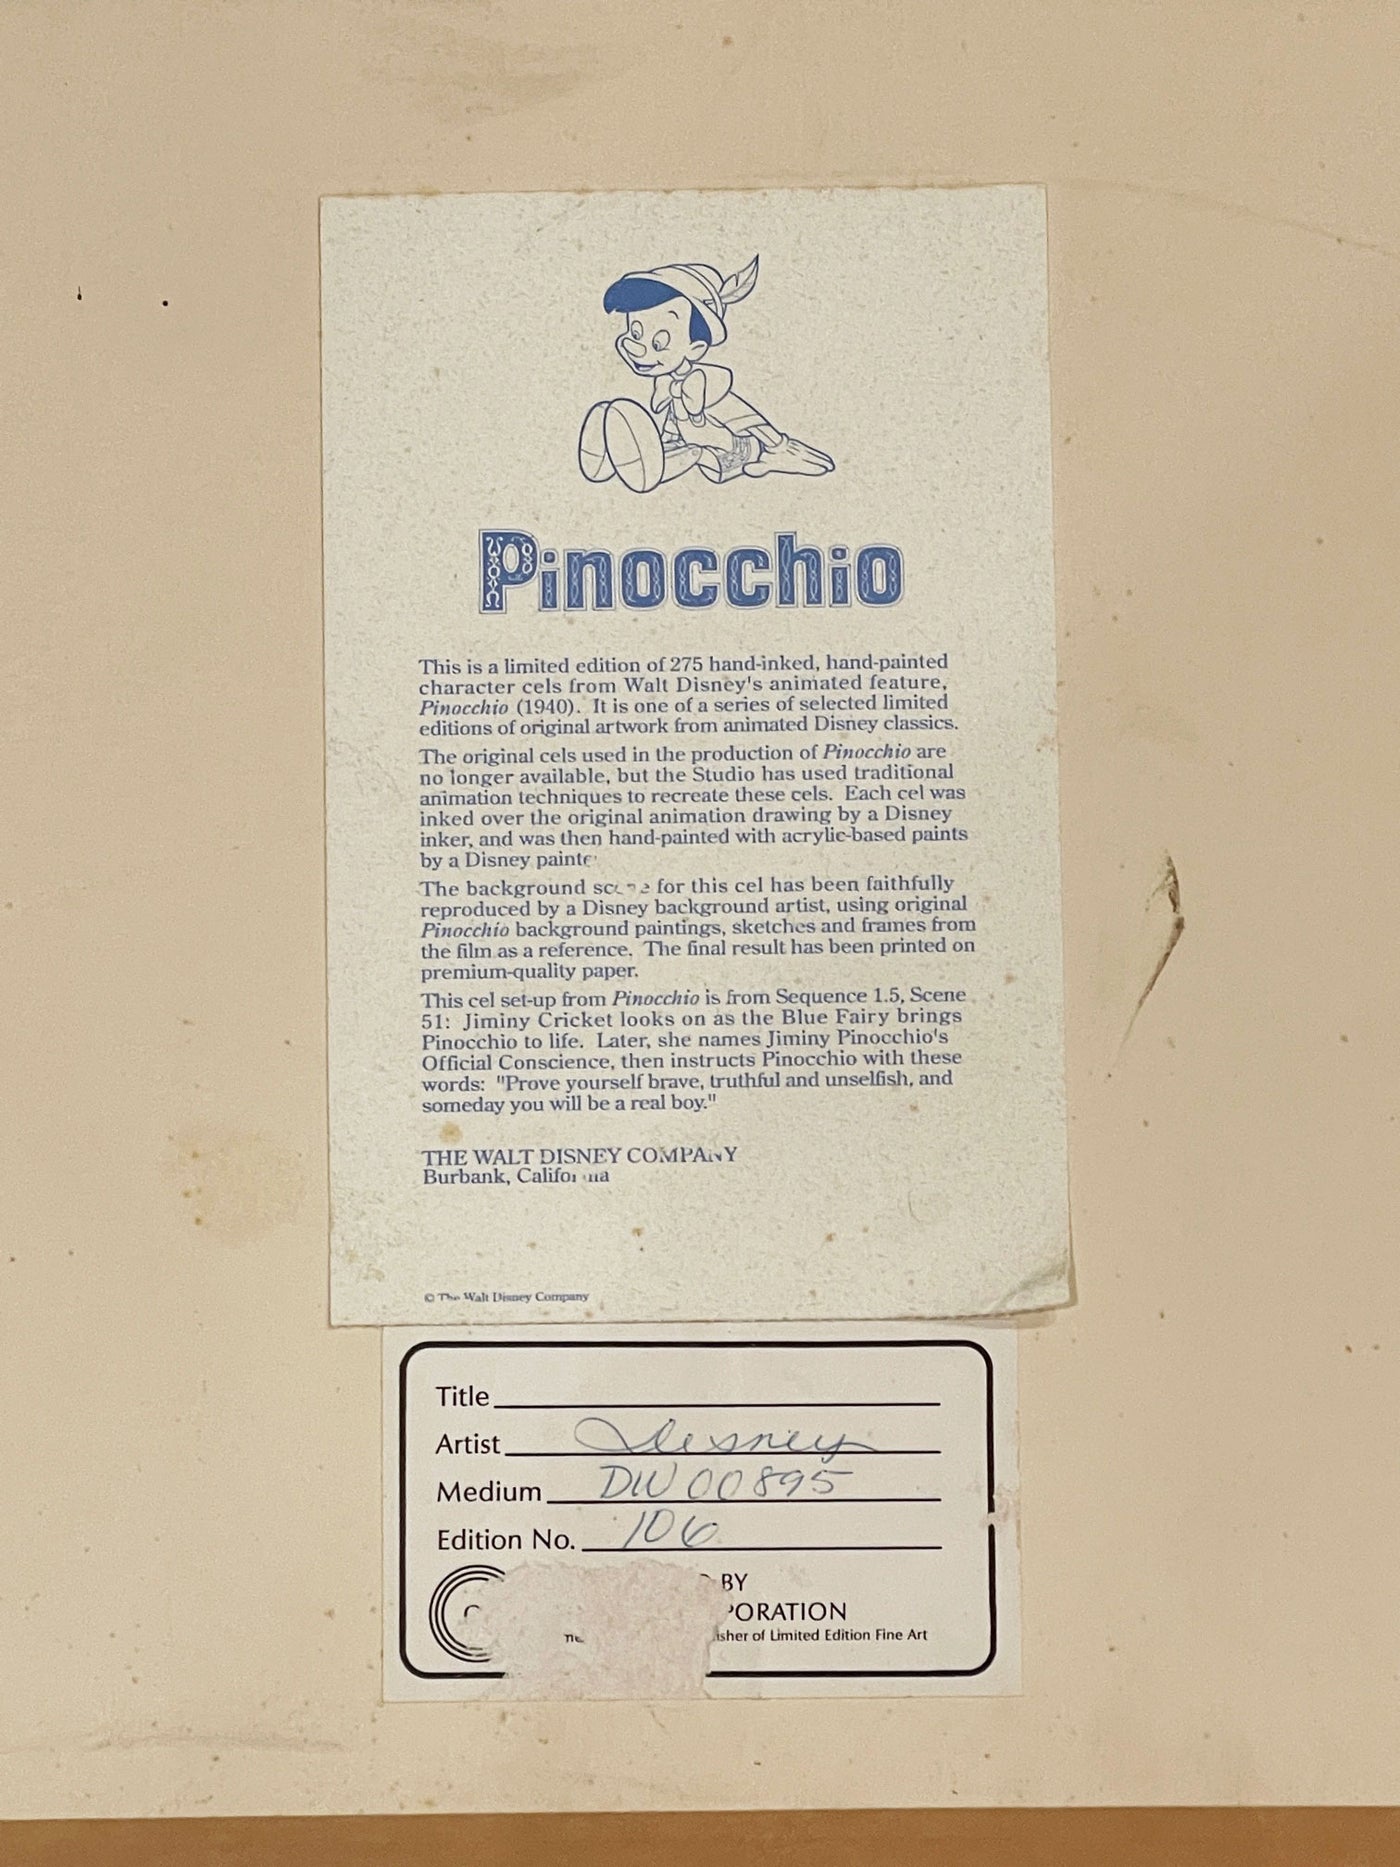 Original Walt Disney Limited Edition Cel featuring Pinocchio, Jiminy Cricket, the Blue Fairy